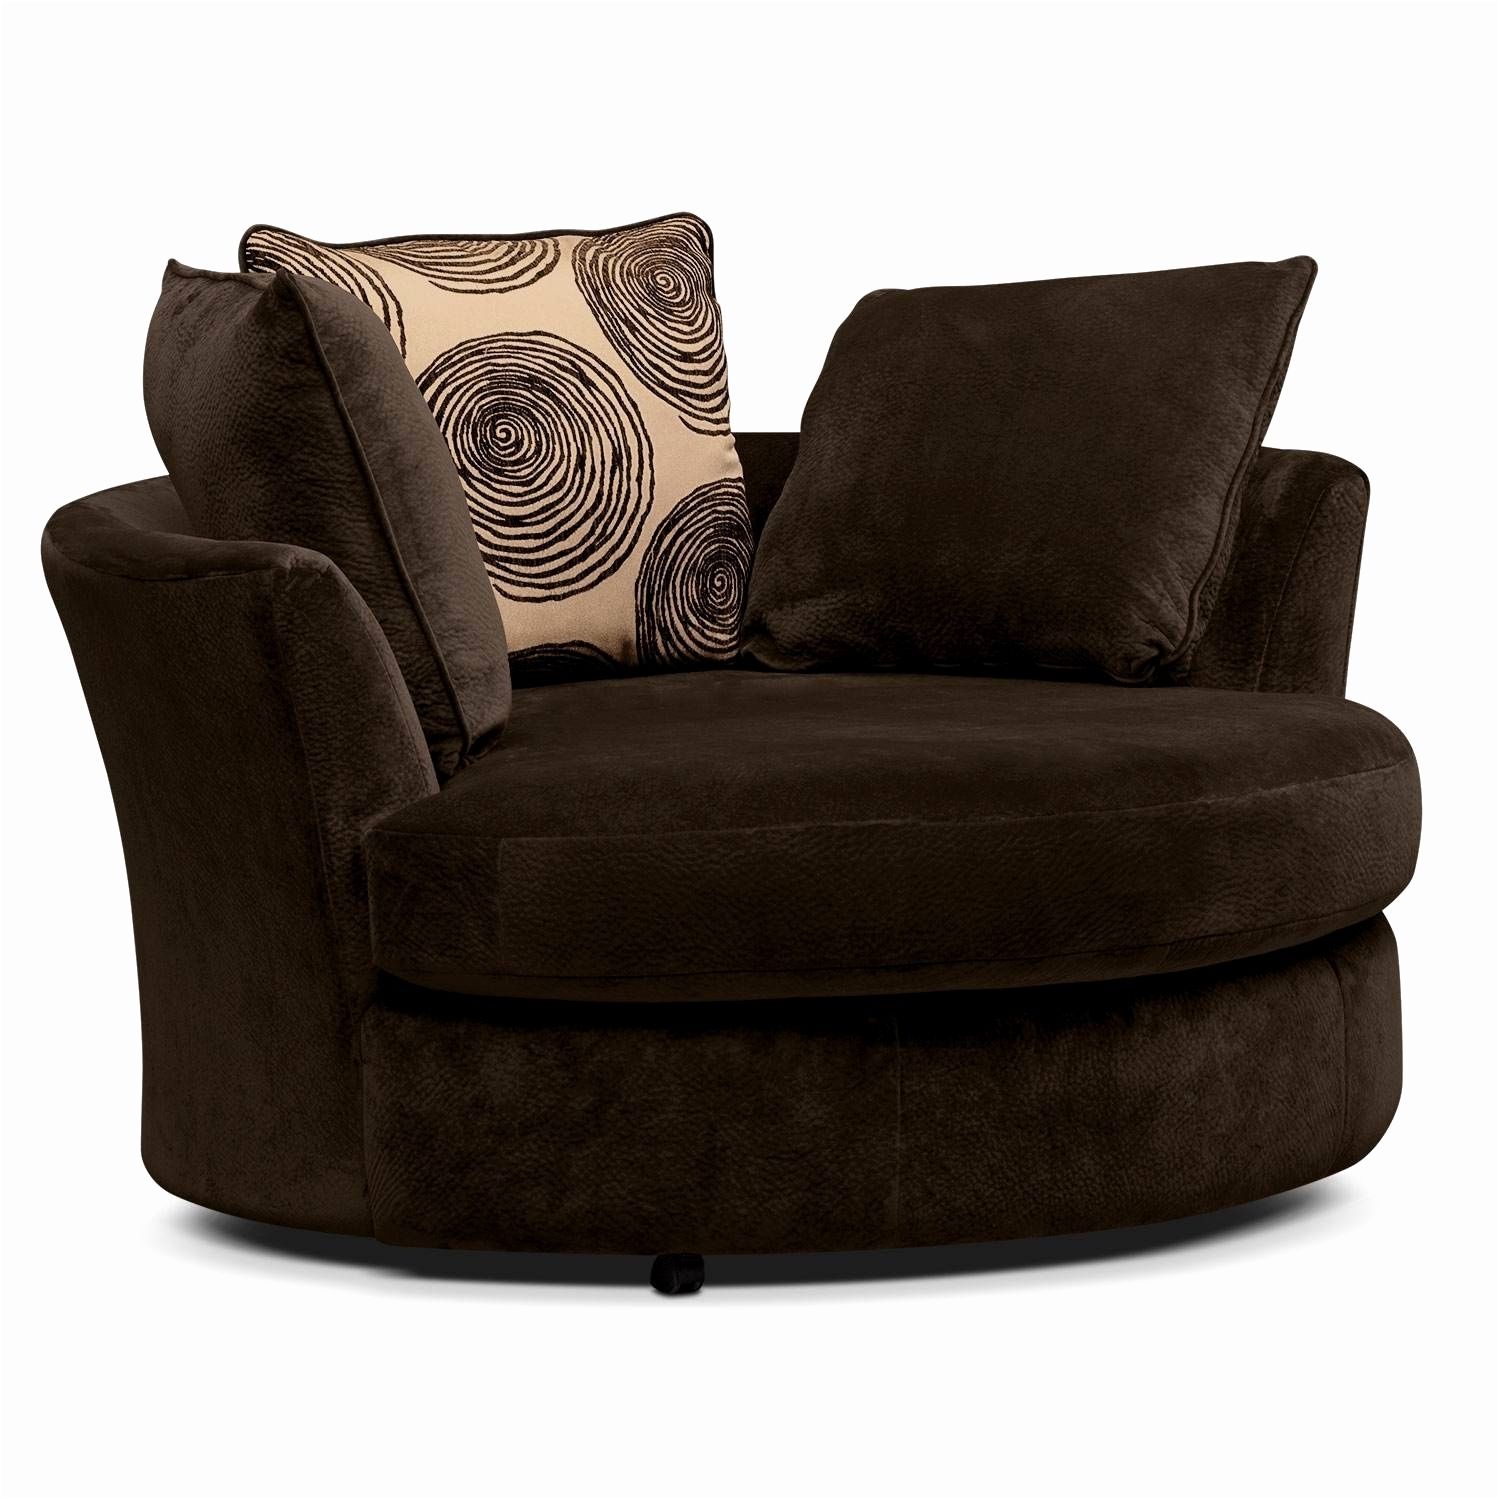 Big Round Sofa Chairs Regarding Most Recent Big Round Sofa Chair – Round Designs (View 8 of 15)